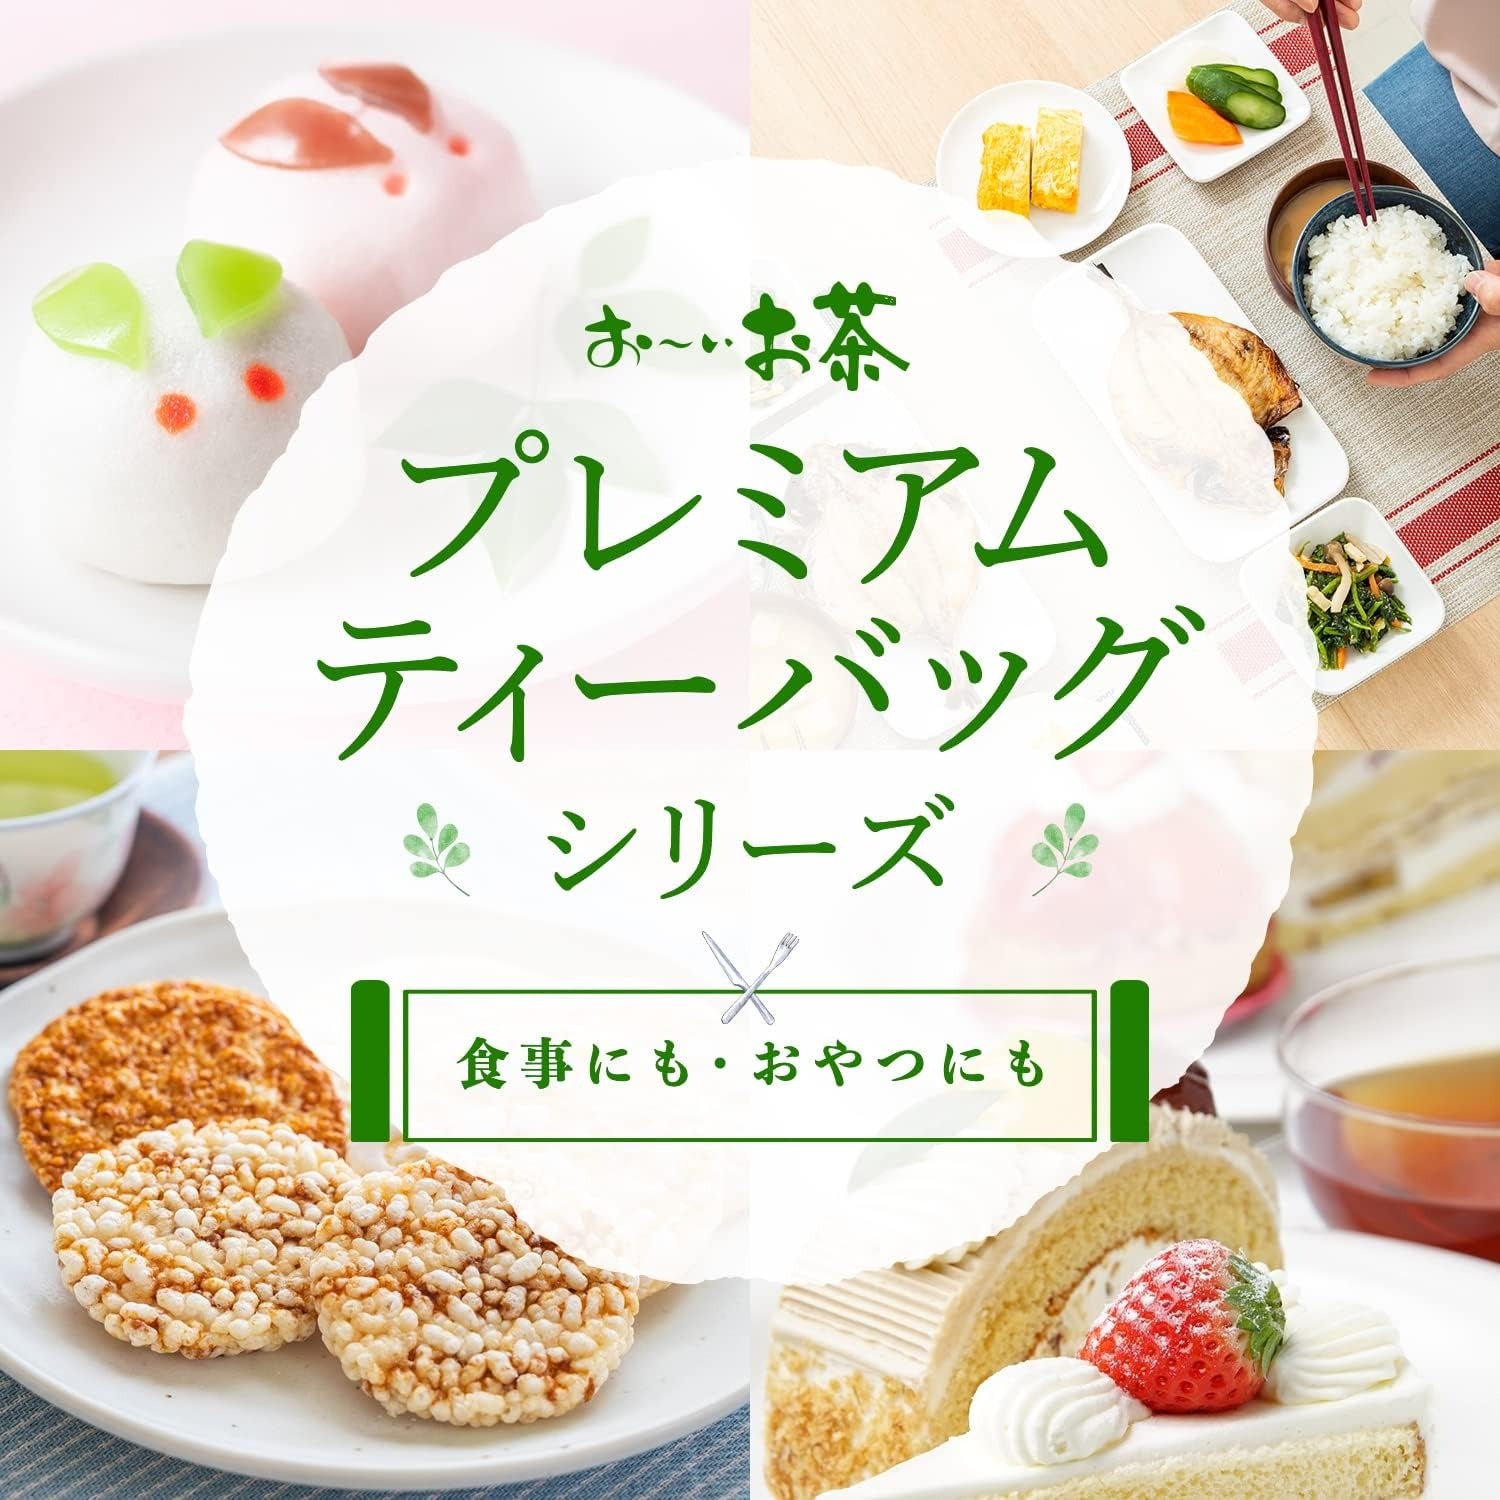 ITOEN Matcha Greentea Pack  ชาเขียวญี่ปุ่นแบบพร้อมดื่ม 20ซอง/กล่อง รุ่นทดลอง  มี 2 รสให้เลือก